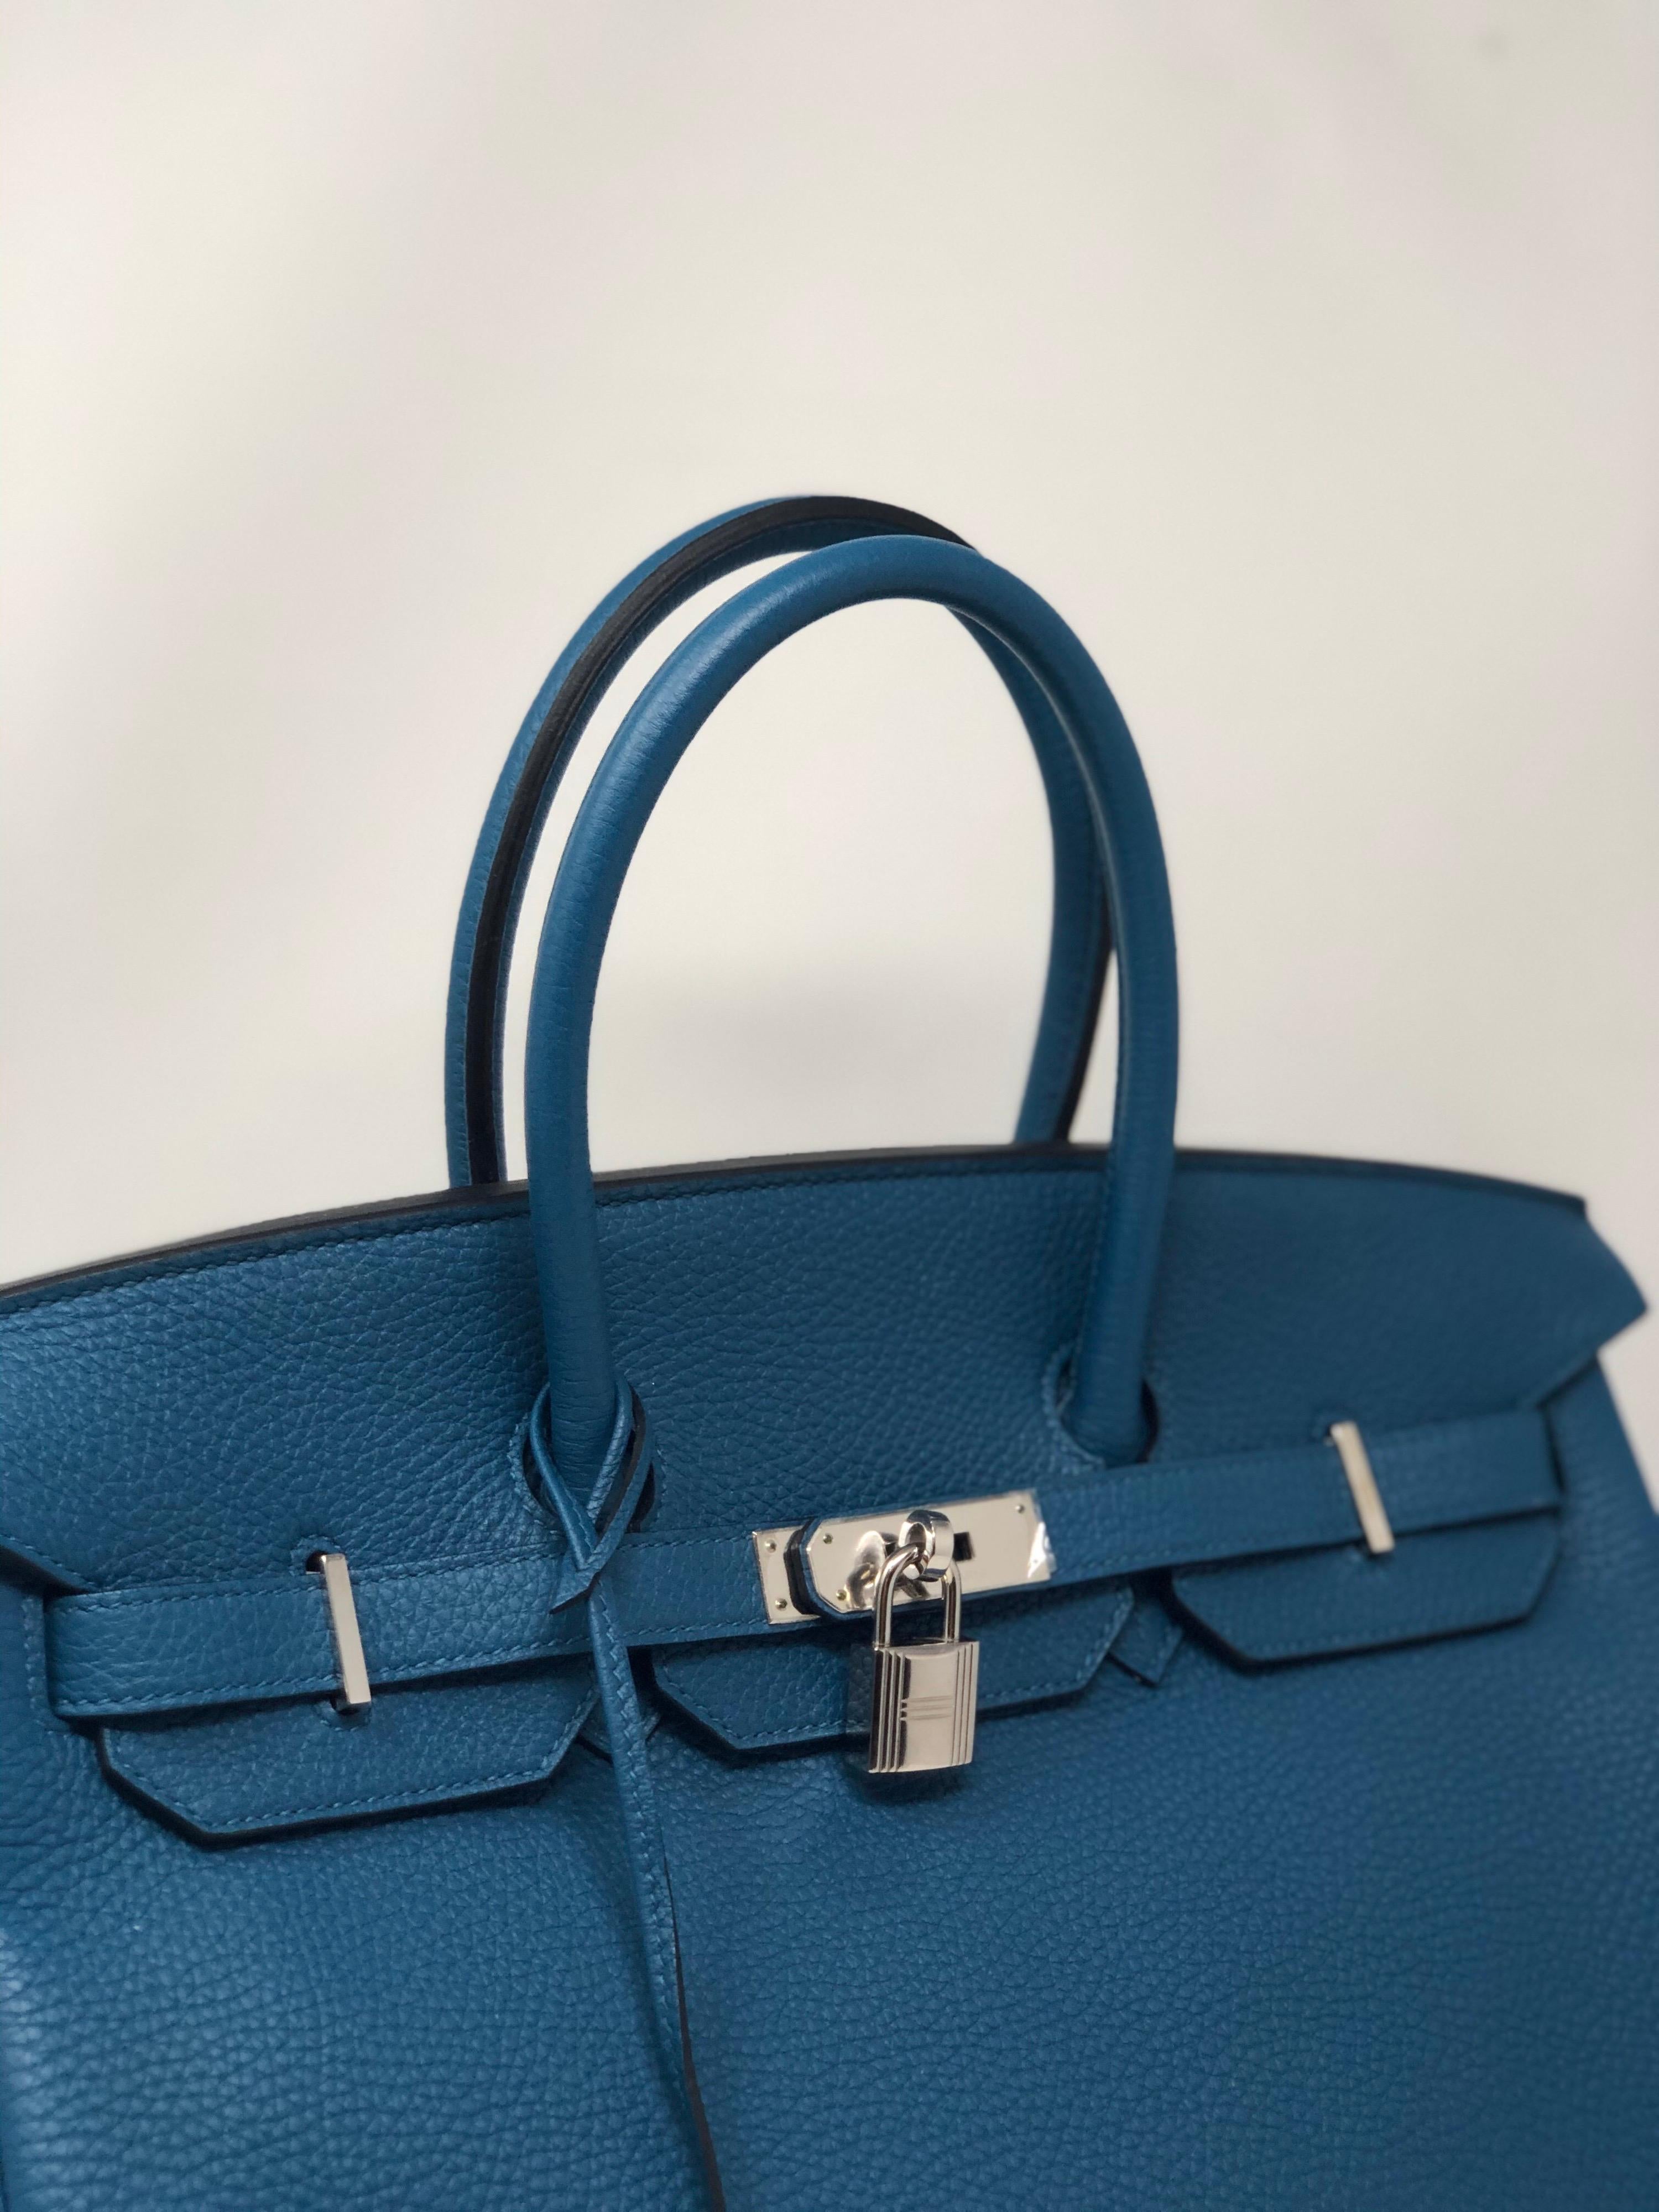 Blue Hermes Birkin Bleu Cobalt 35 Bag